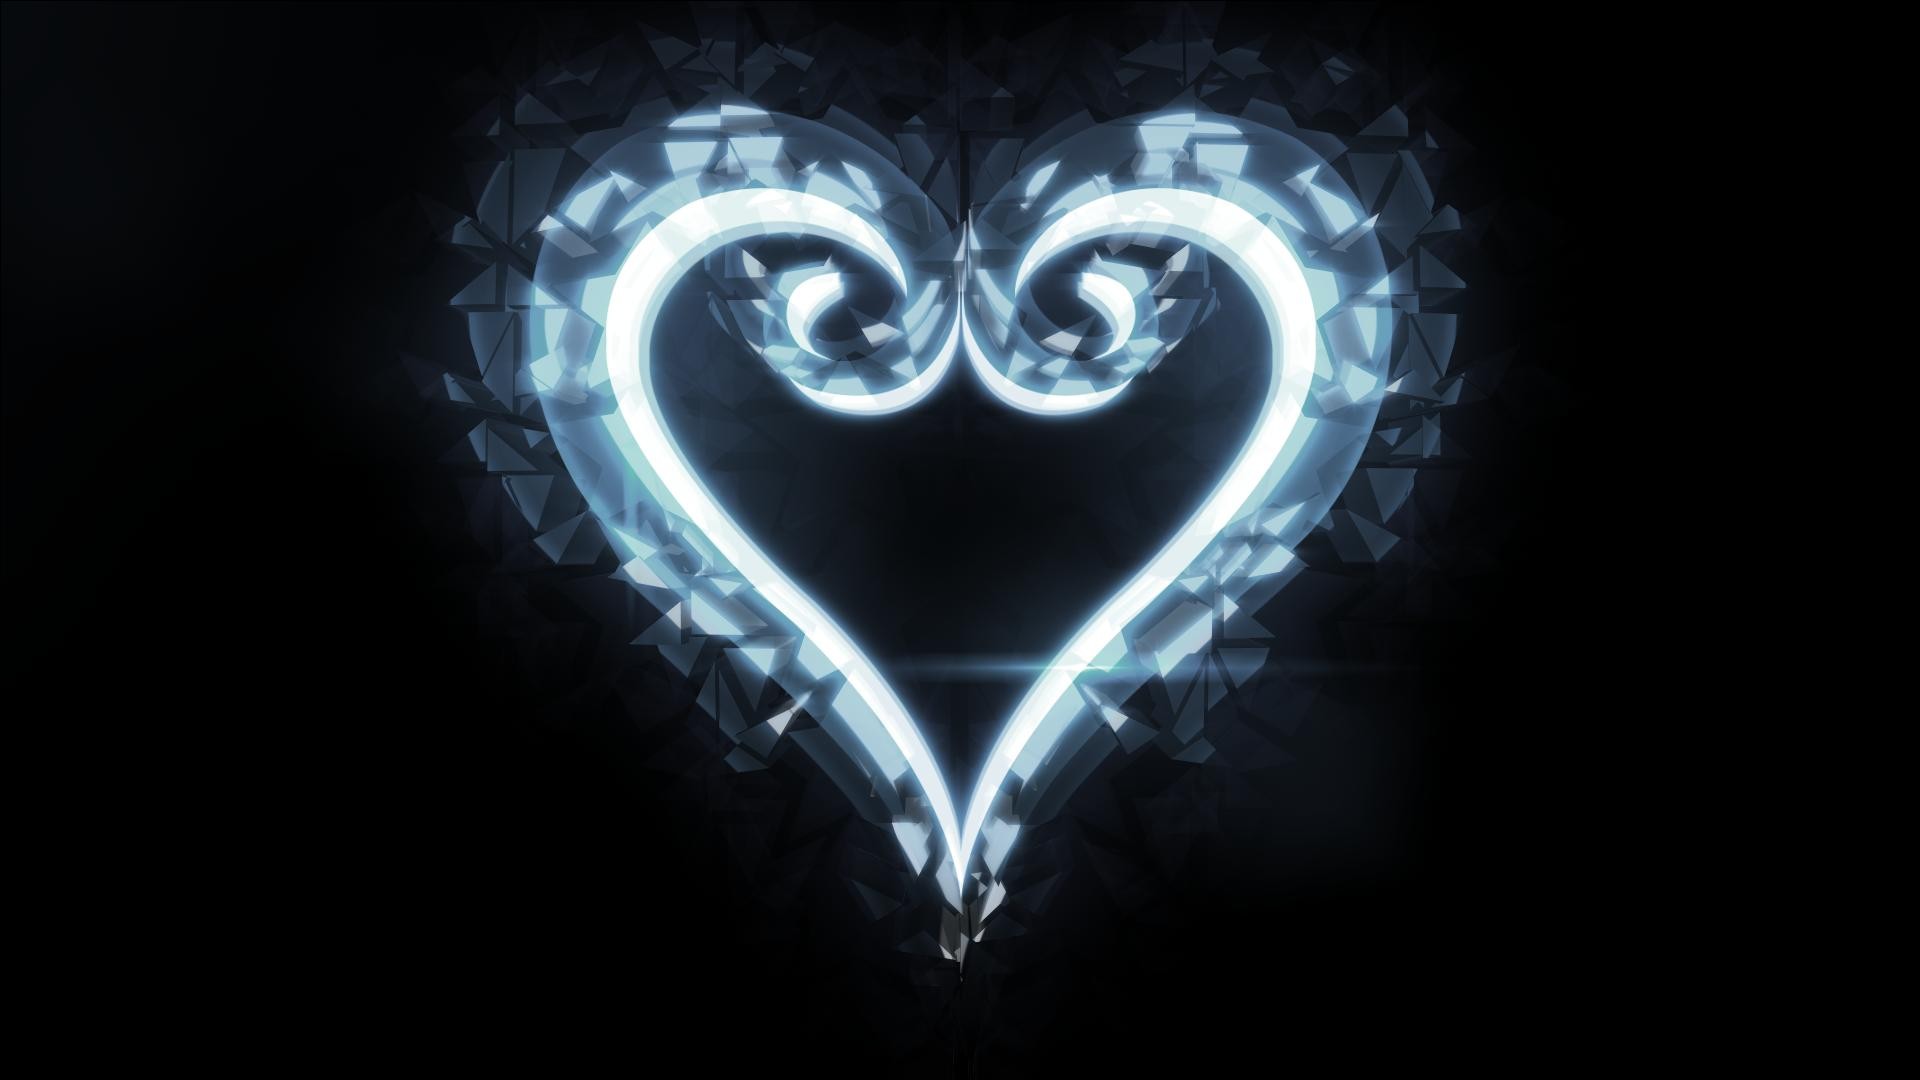 Kingdom Hearts Background 1080p - HD Wallpaper 